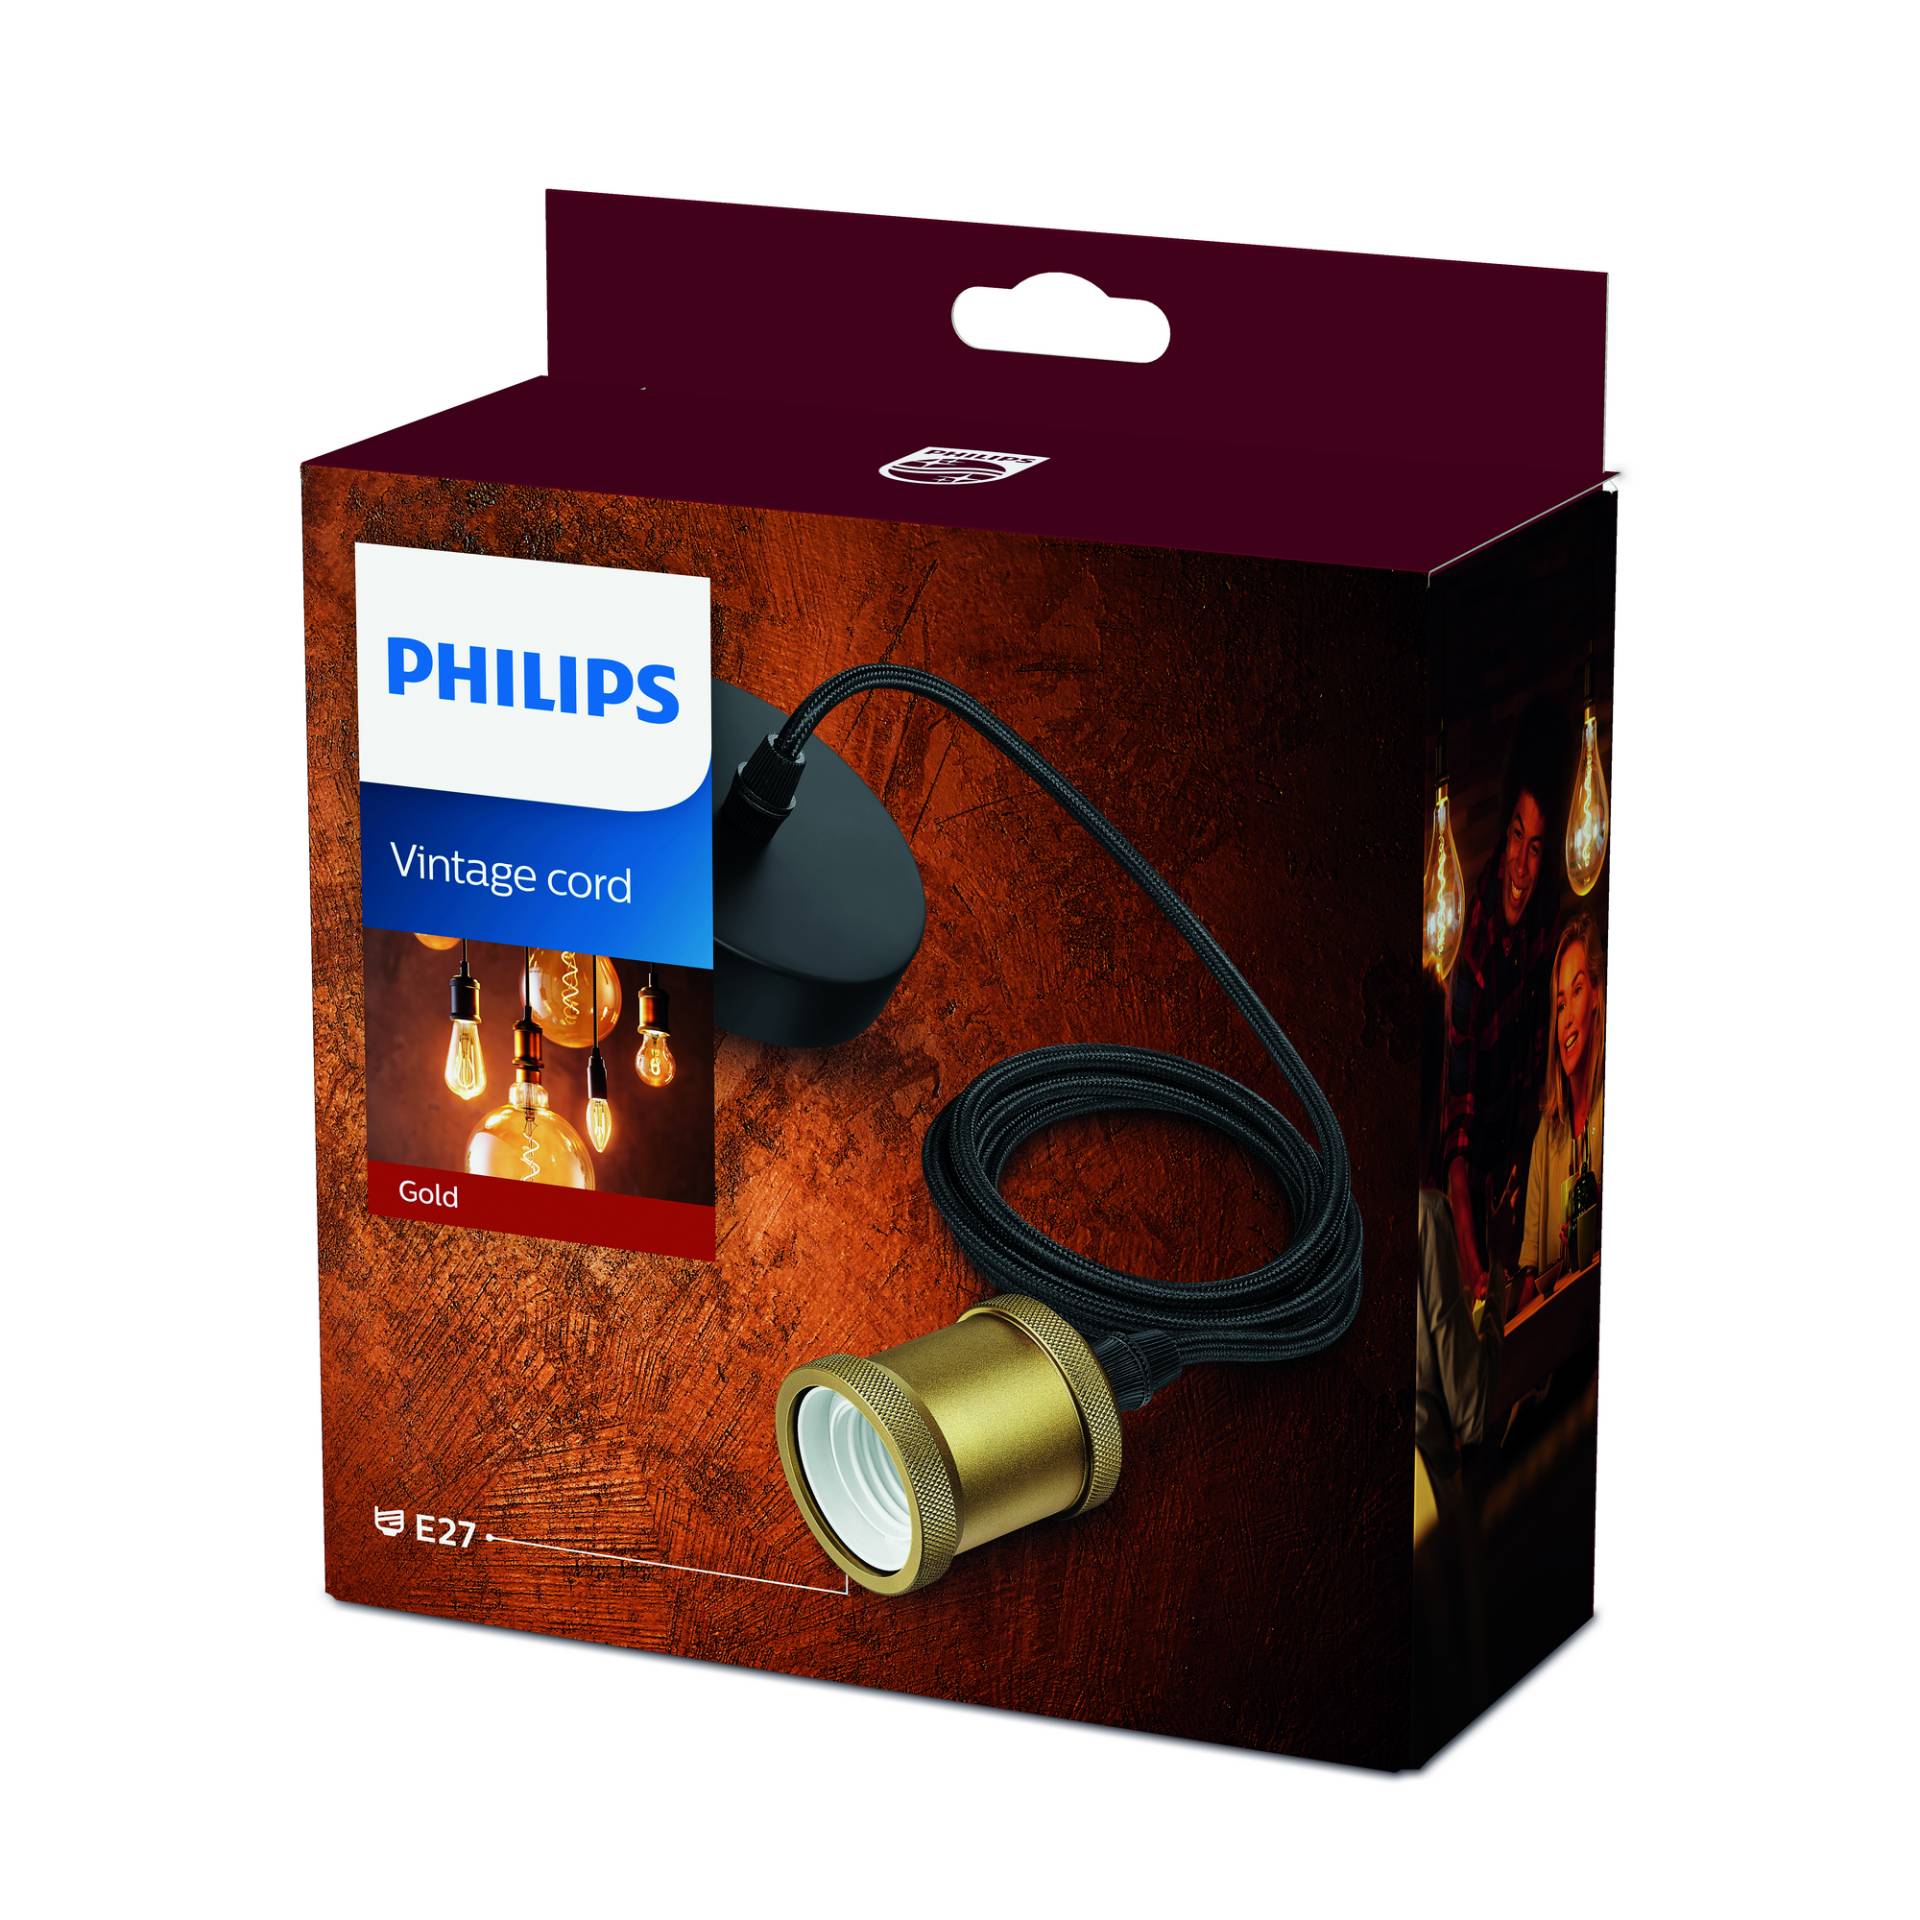 Philips Schnurpendel E27 Fassung 220-240 V gold von Philips